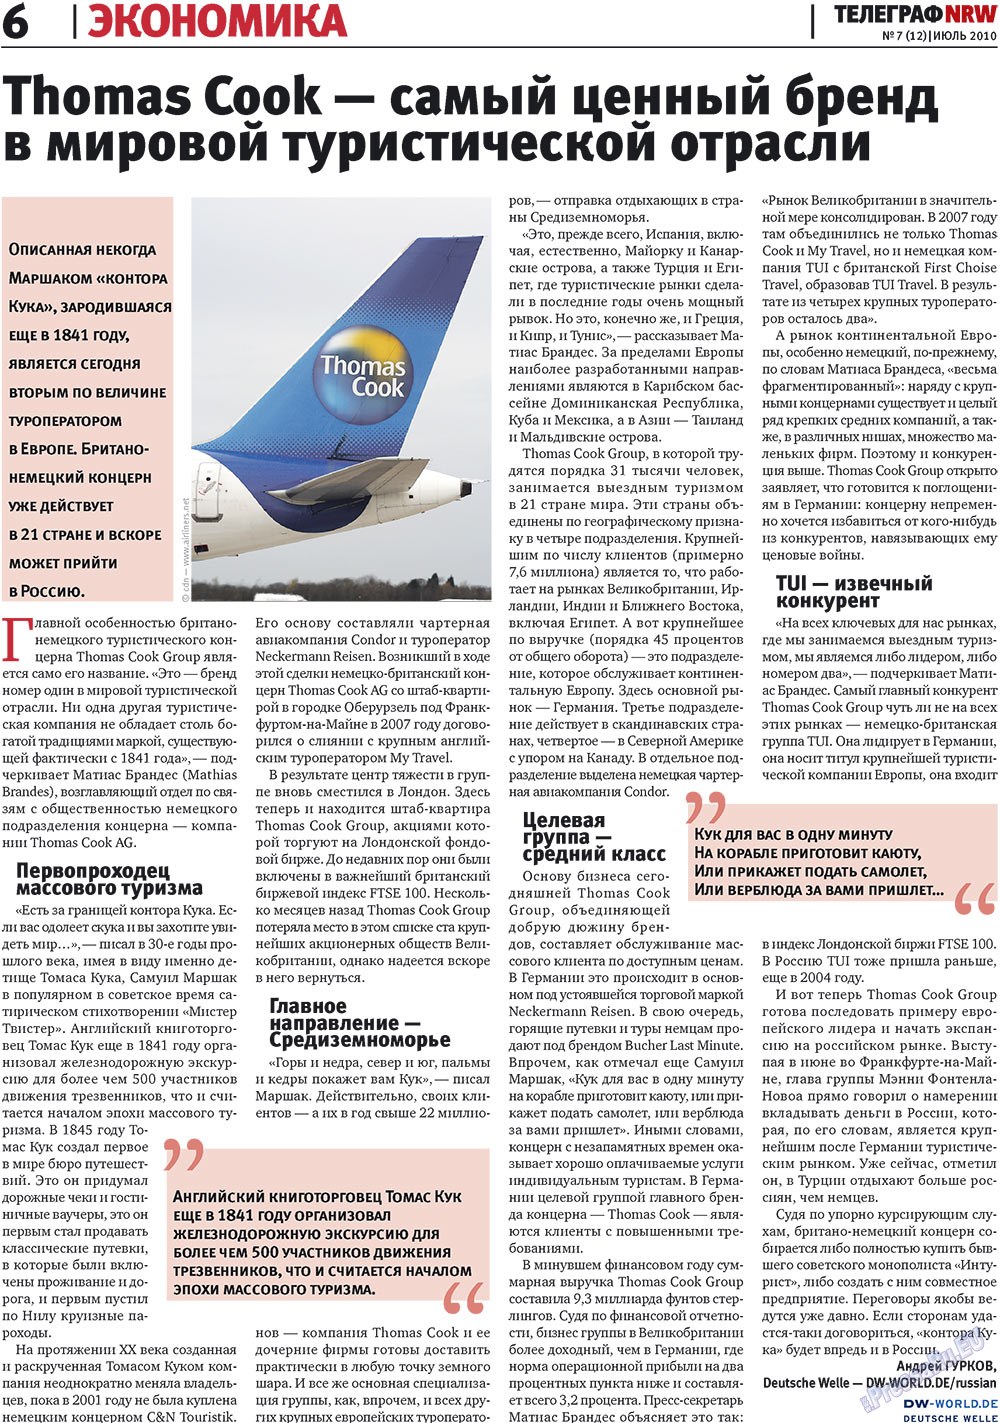 Телеграф NRW, газета. 2010 №7 стр.6